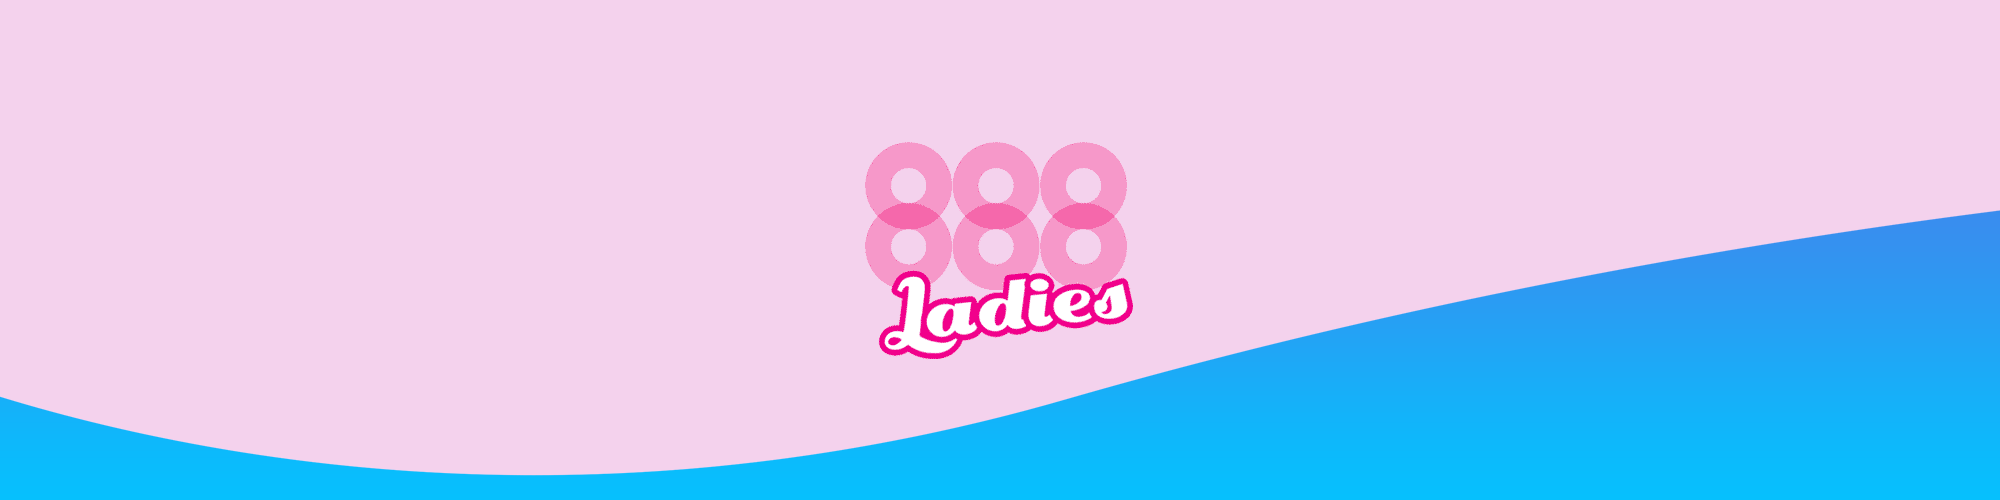 888 Ladies Bingo Alternative on EazeGames